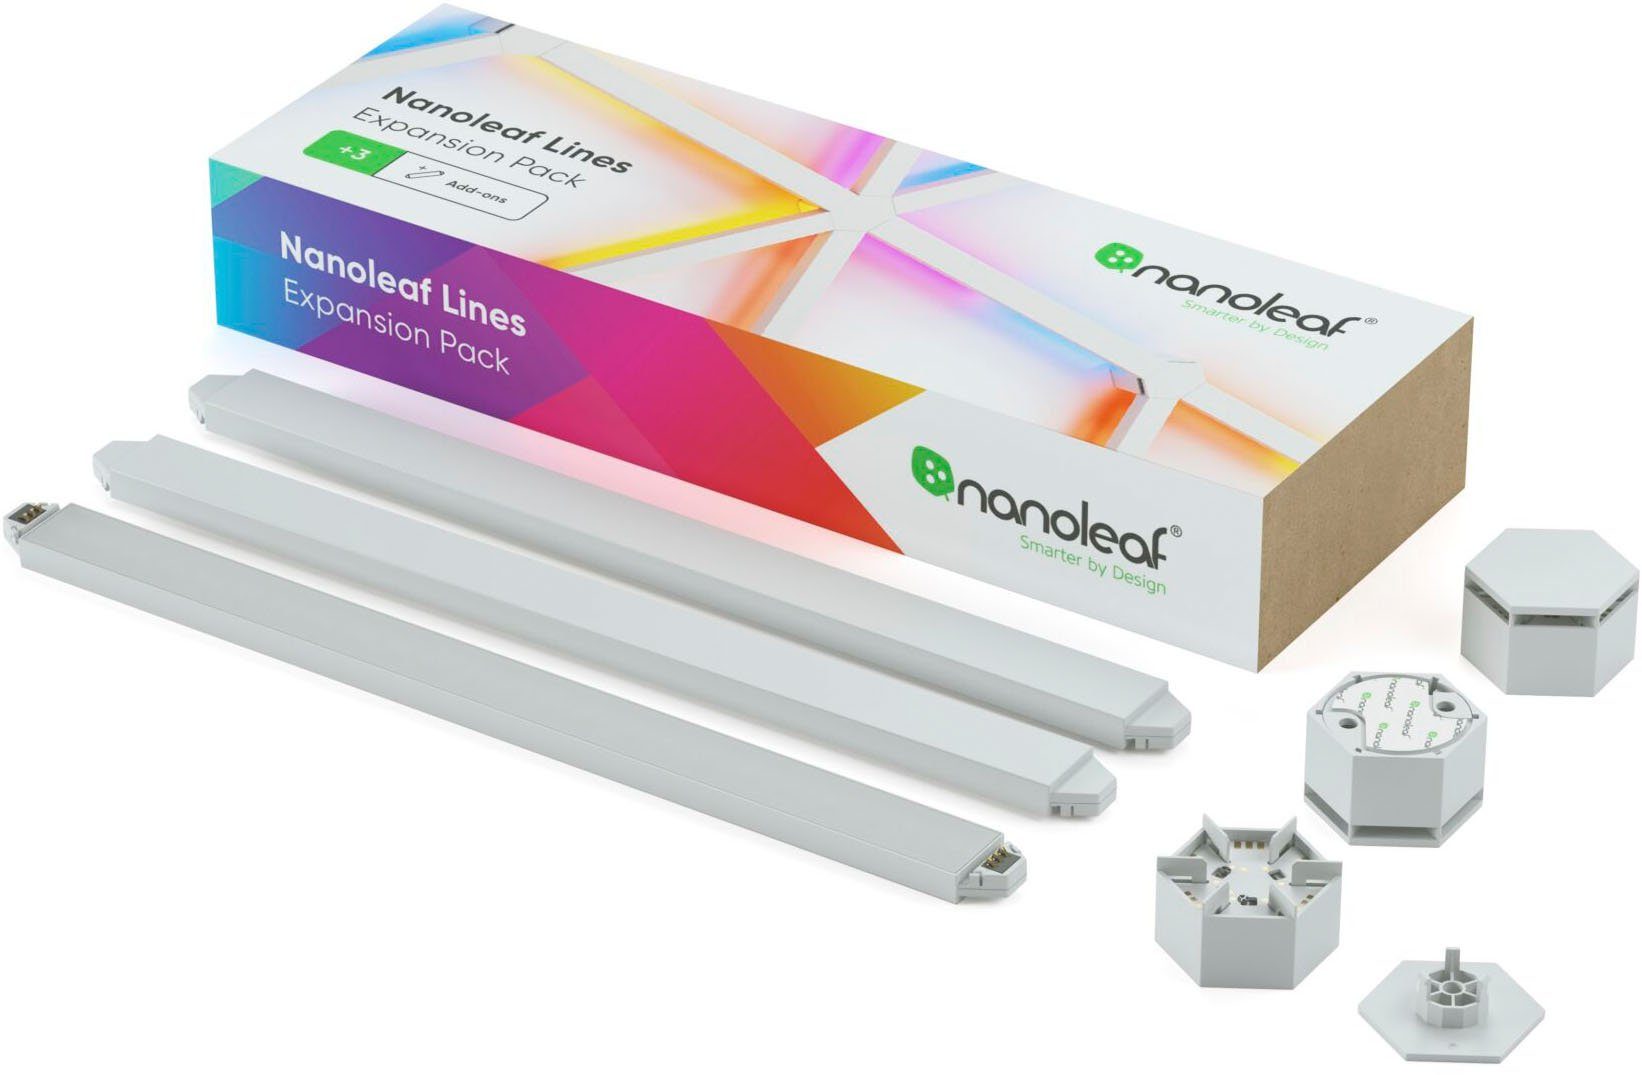 Lichtleiste fest elegante Smarte Beleuchtung nanoleaf und Lines, integriert, Farbwechsler, LED LED Technologie Dimmfunktion,